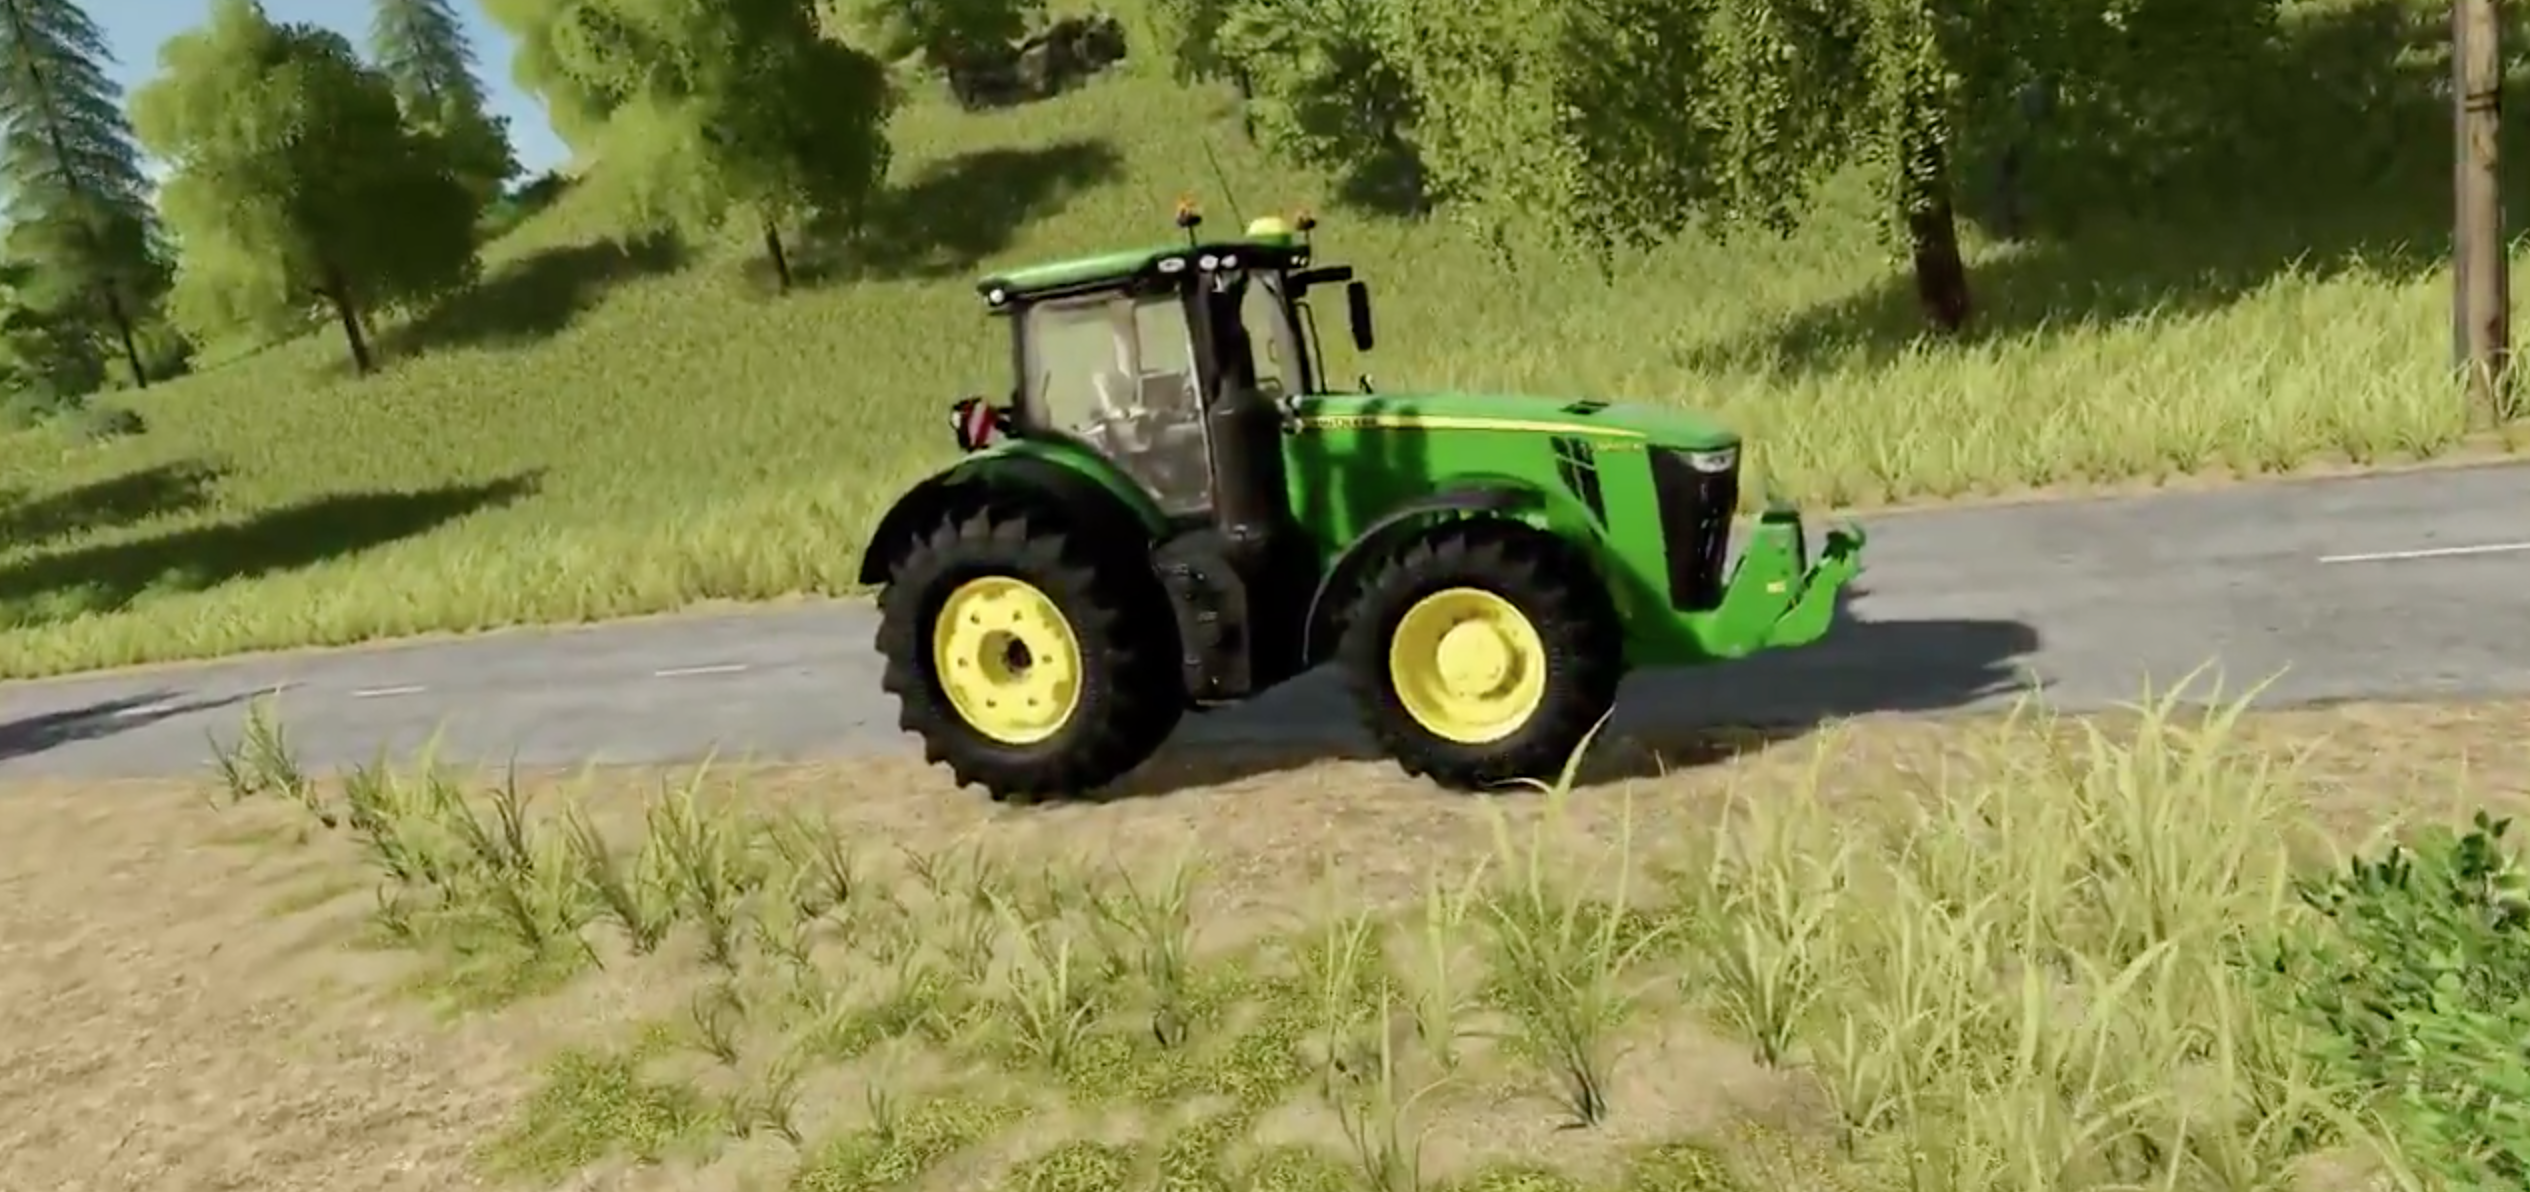 tractor simulator game free